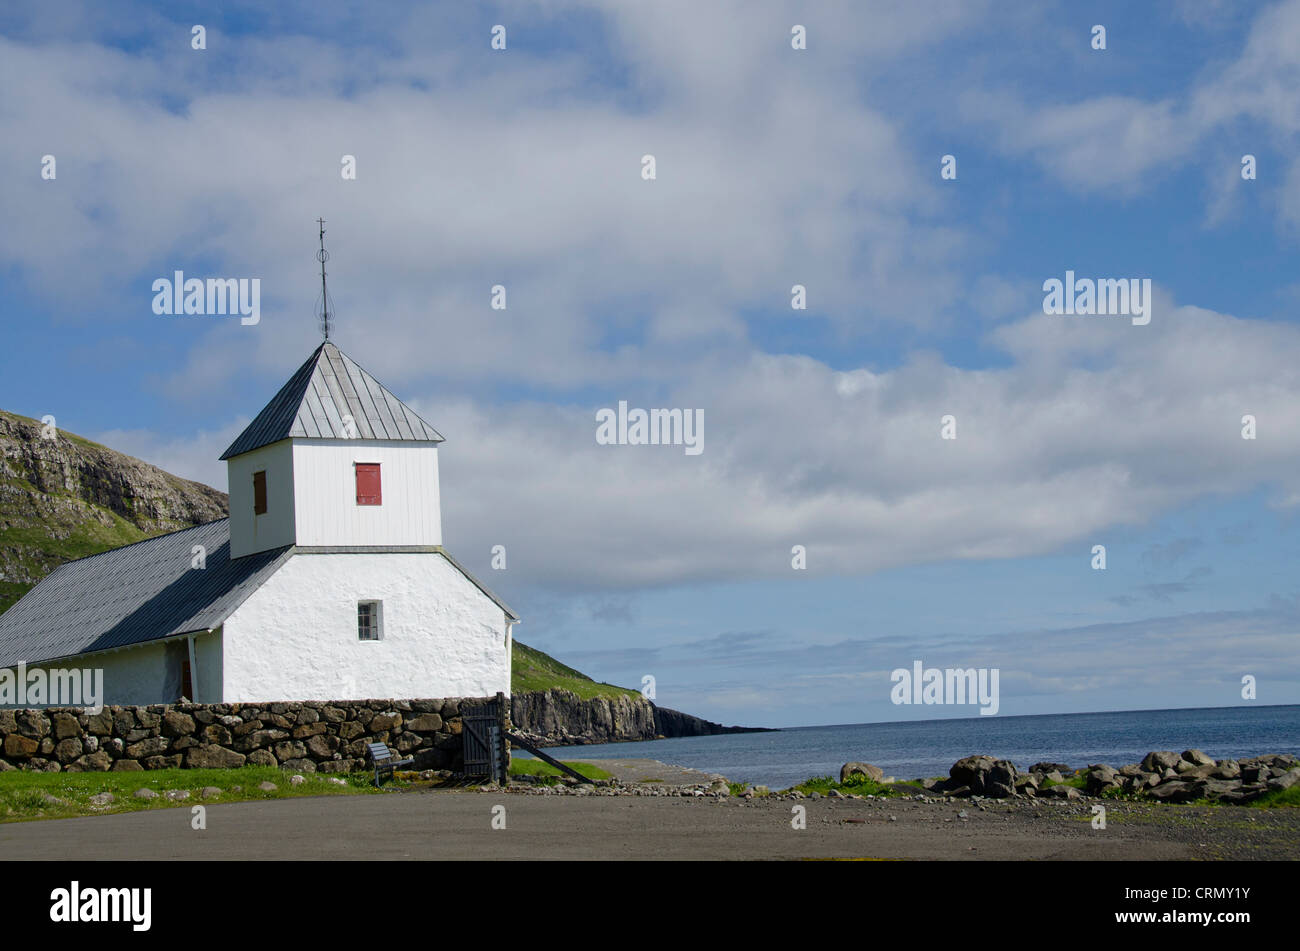 Kingdom of Denmark, Faroe Islands. Historic medieval church of Kirkjubour, dedicated to the Virgin Mary & St. Olav, c. 1111. Stock Photo